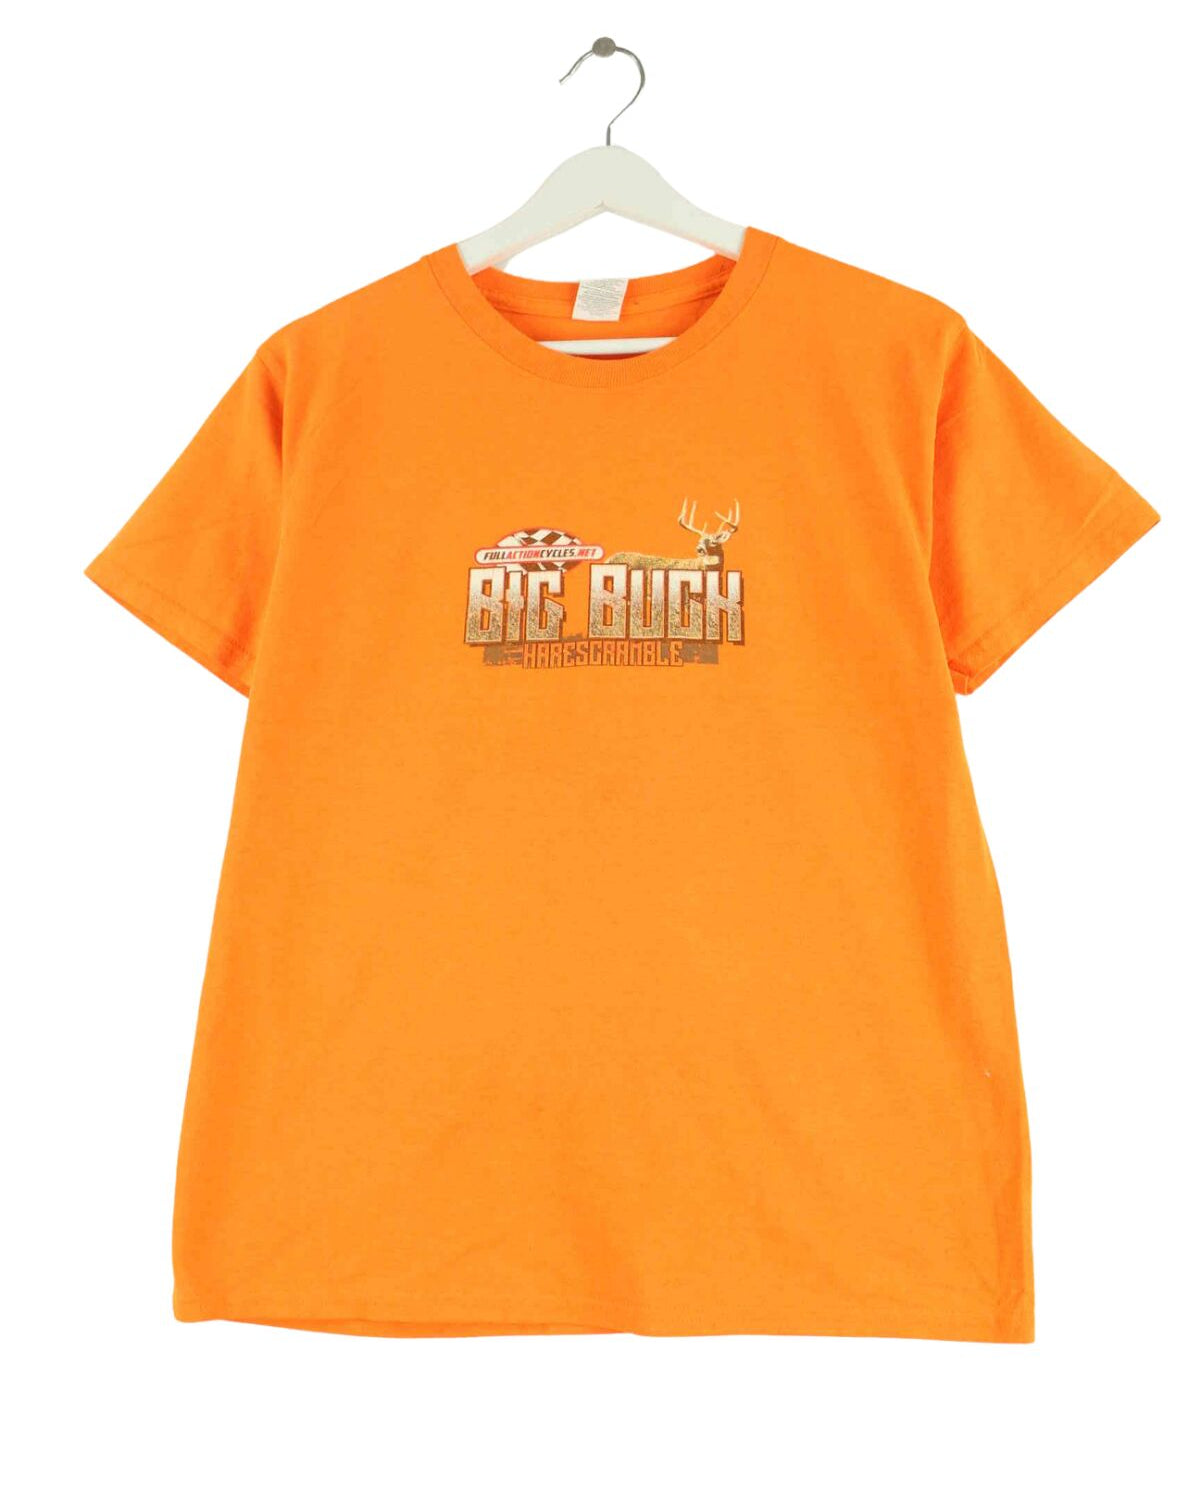 Gildan Damen Big Buck Moto Racing Print T-Shirt Orange XXS (front image)